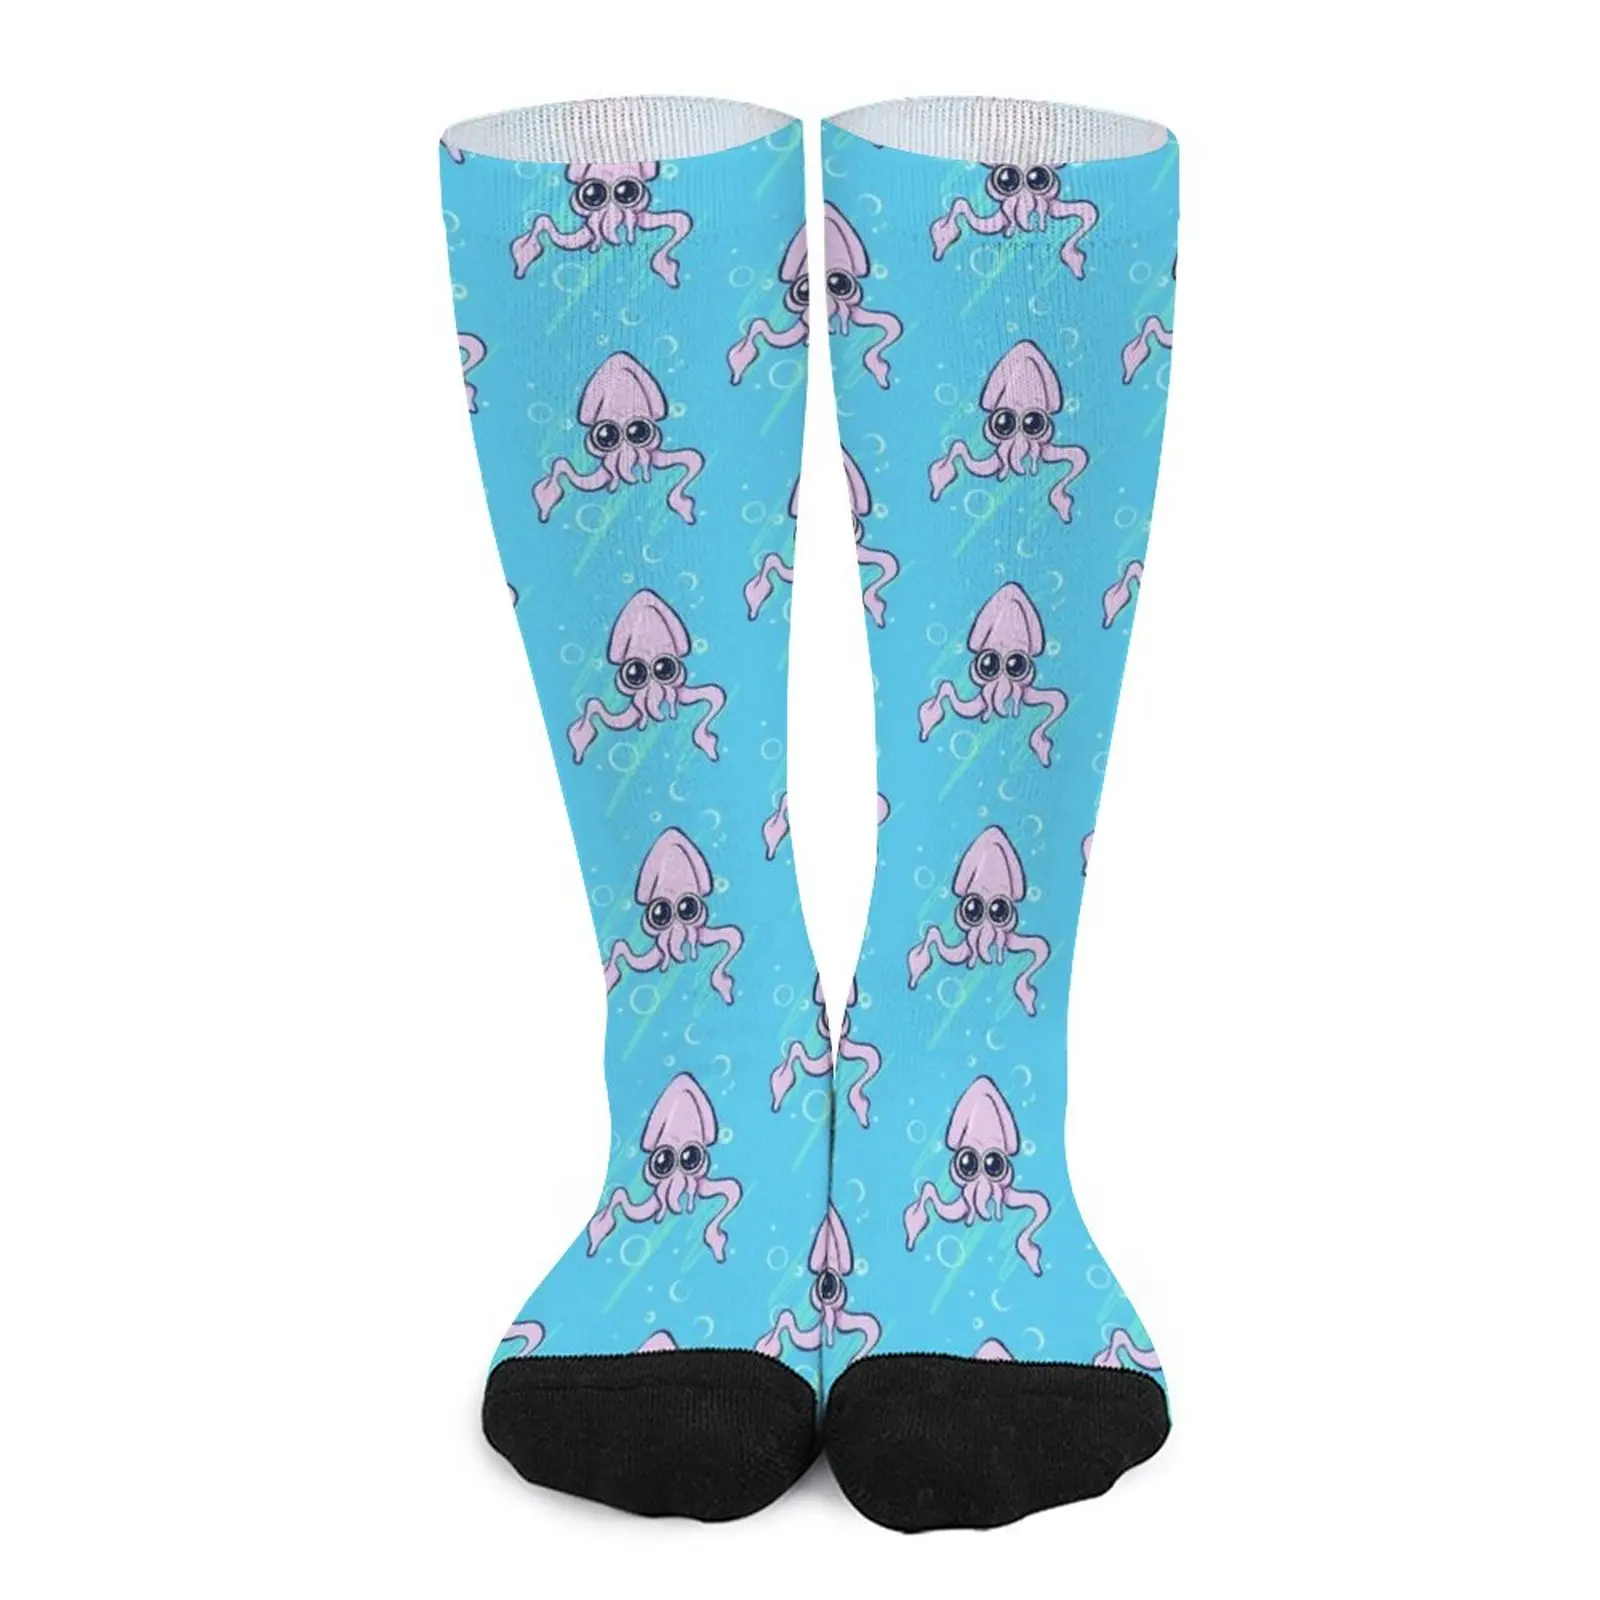 Lil Squidy Socks Funny socks Compression stockings valentines day gift for boyfriend long socks man “thank you very much miss lippy” billy madison socks soccer women s compression sock long socks man black socks